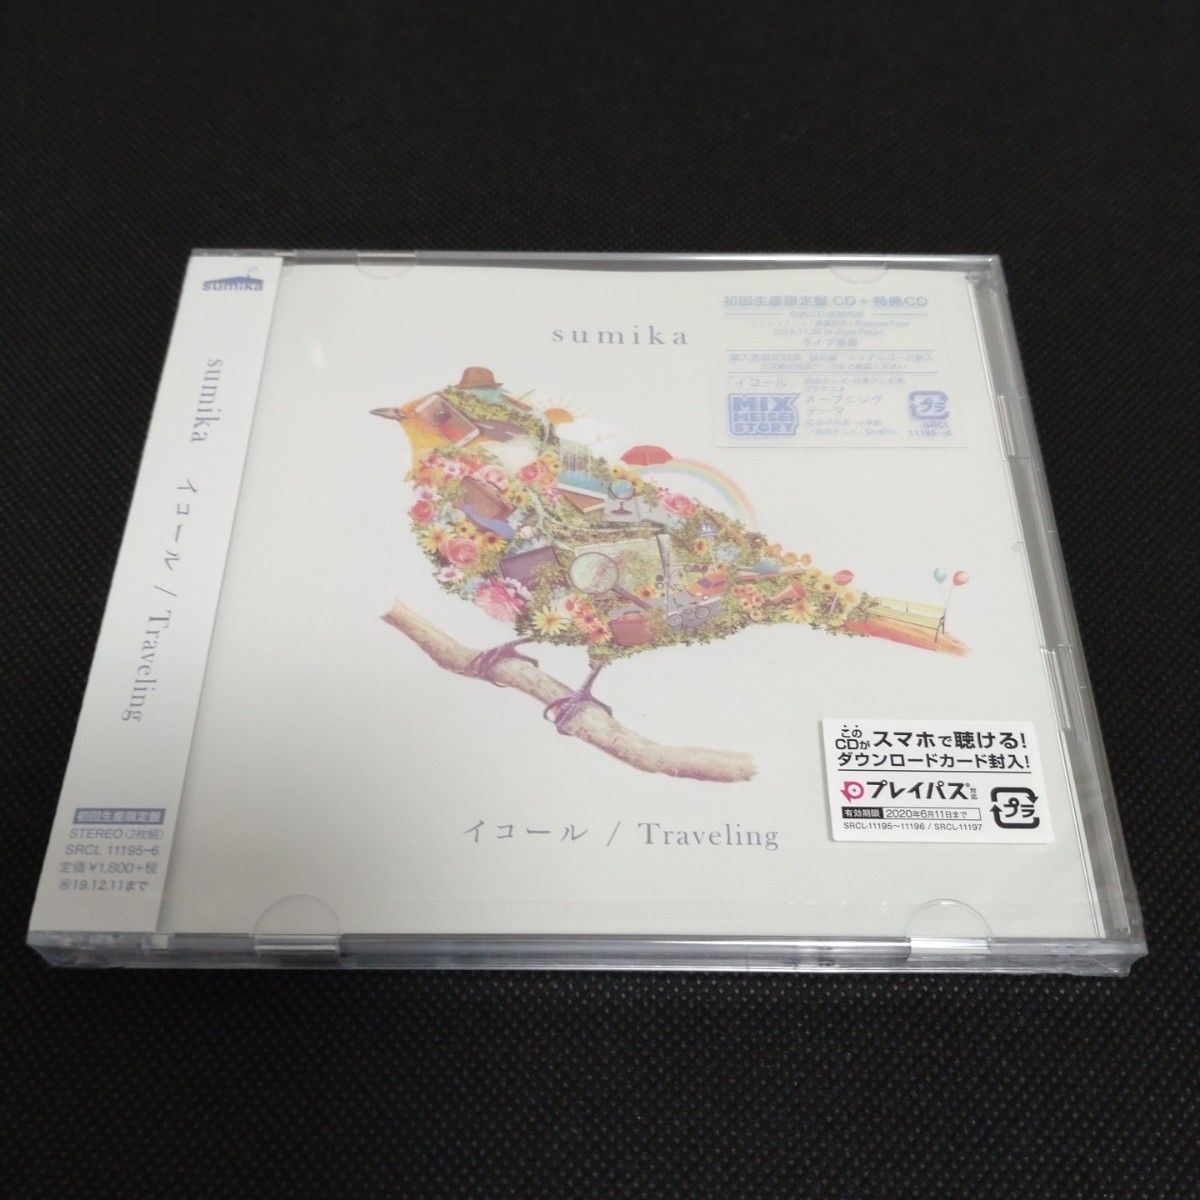 sumika / イコール / Traveling 【初回生産限定盤[CD＋DVD]】(未開封品)  スミカ banbi バンビ